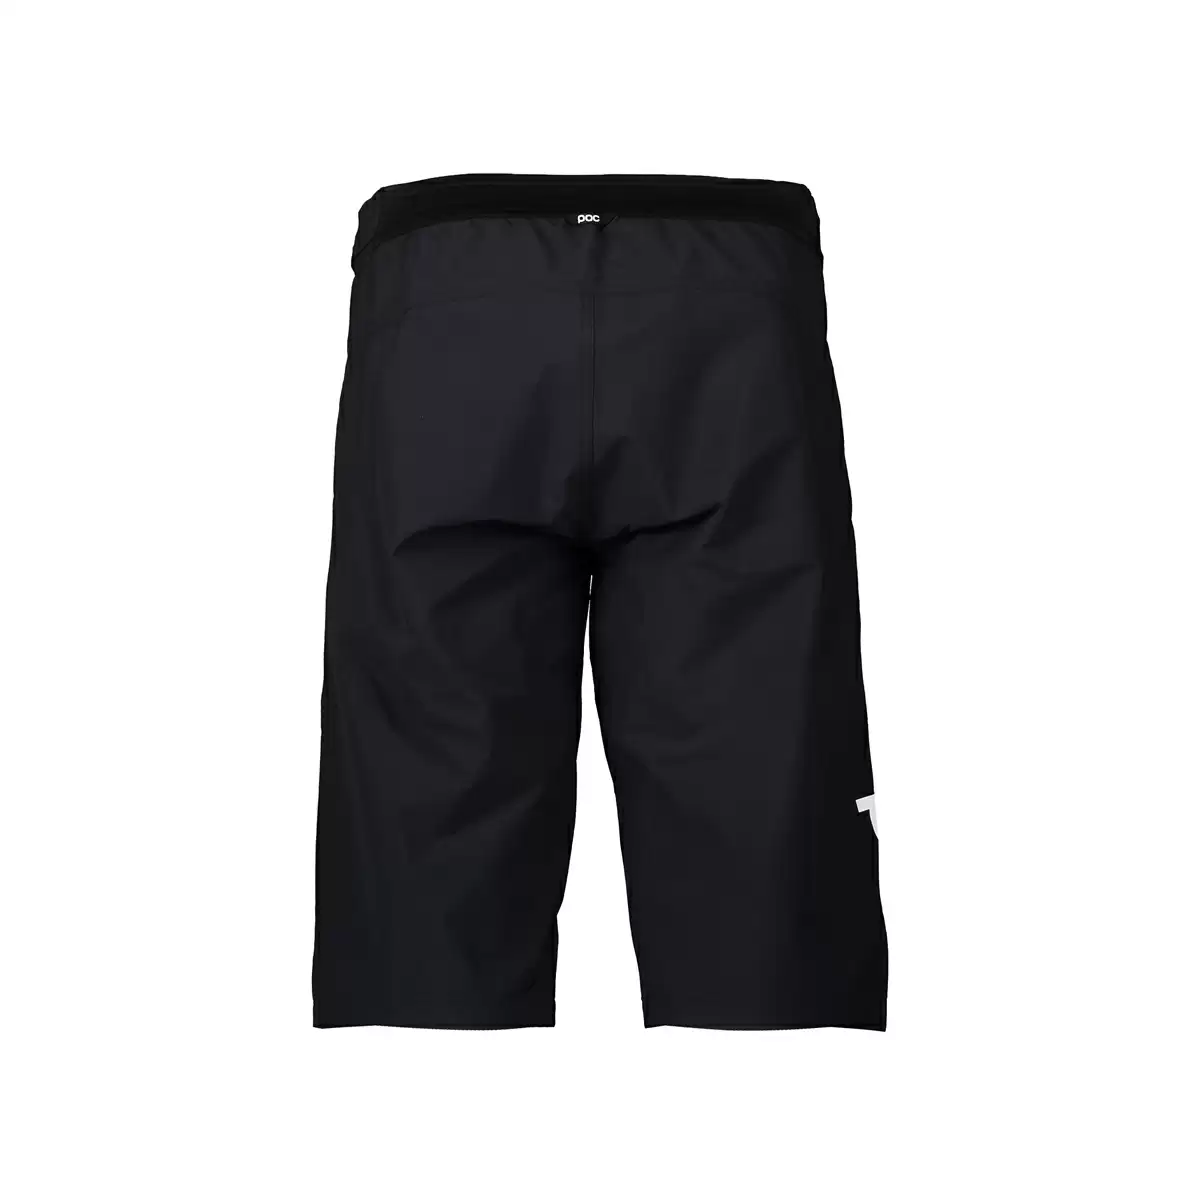 Essential Enduro Shorts black size S #1